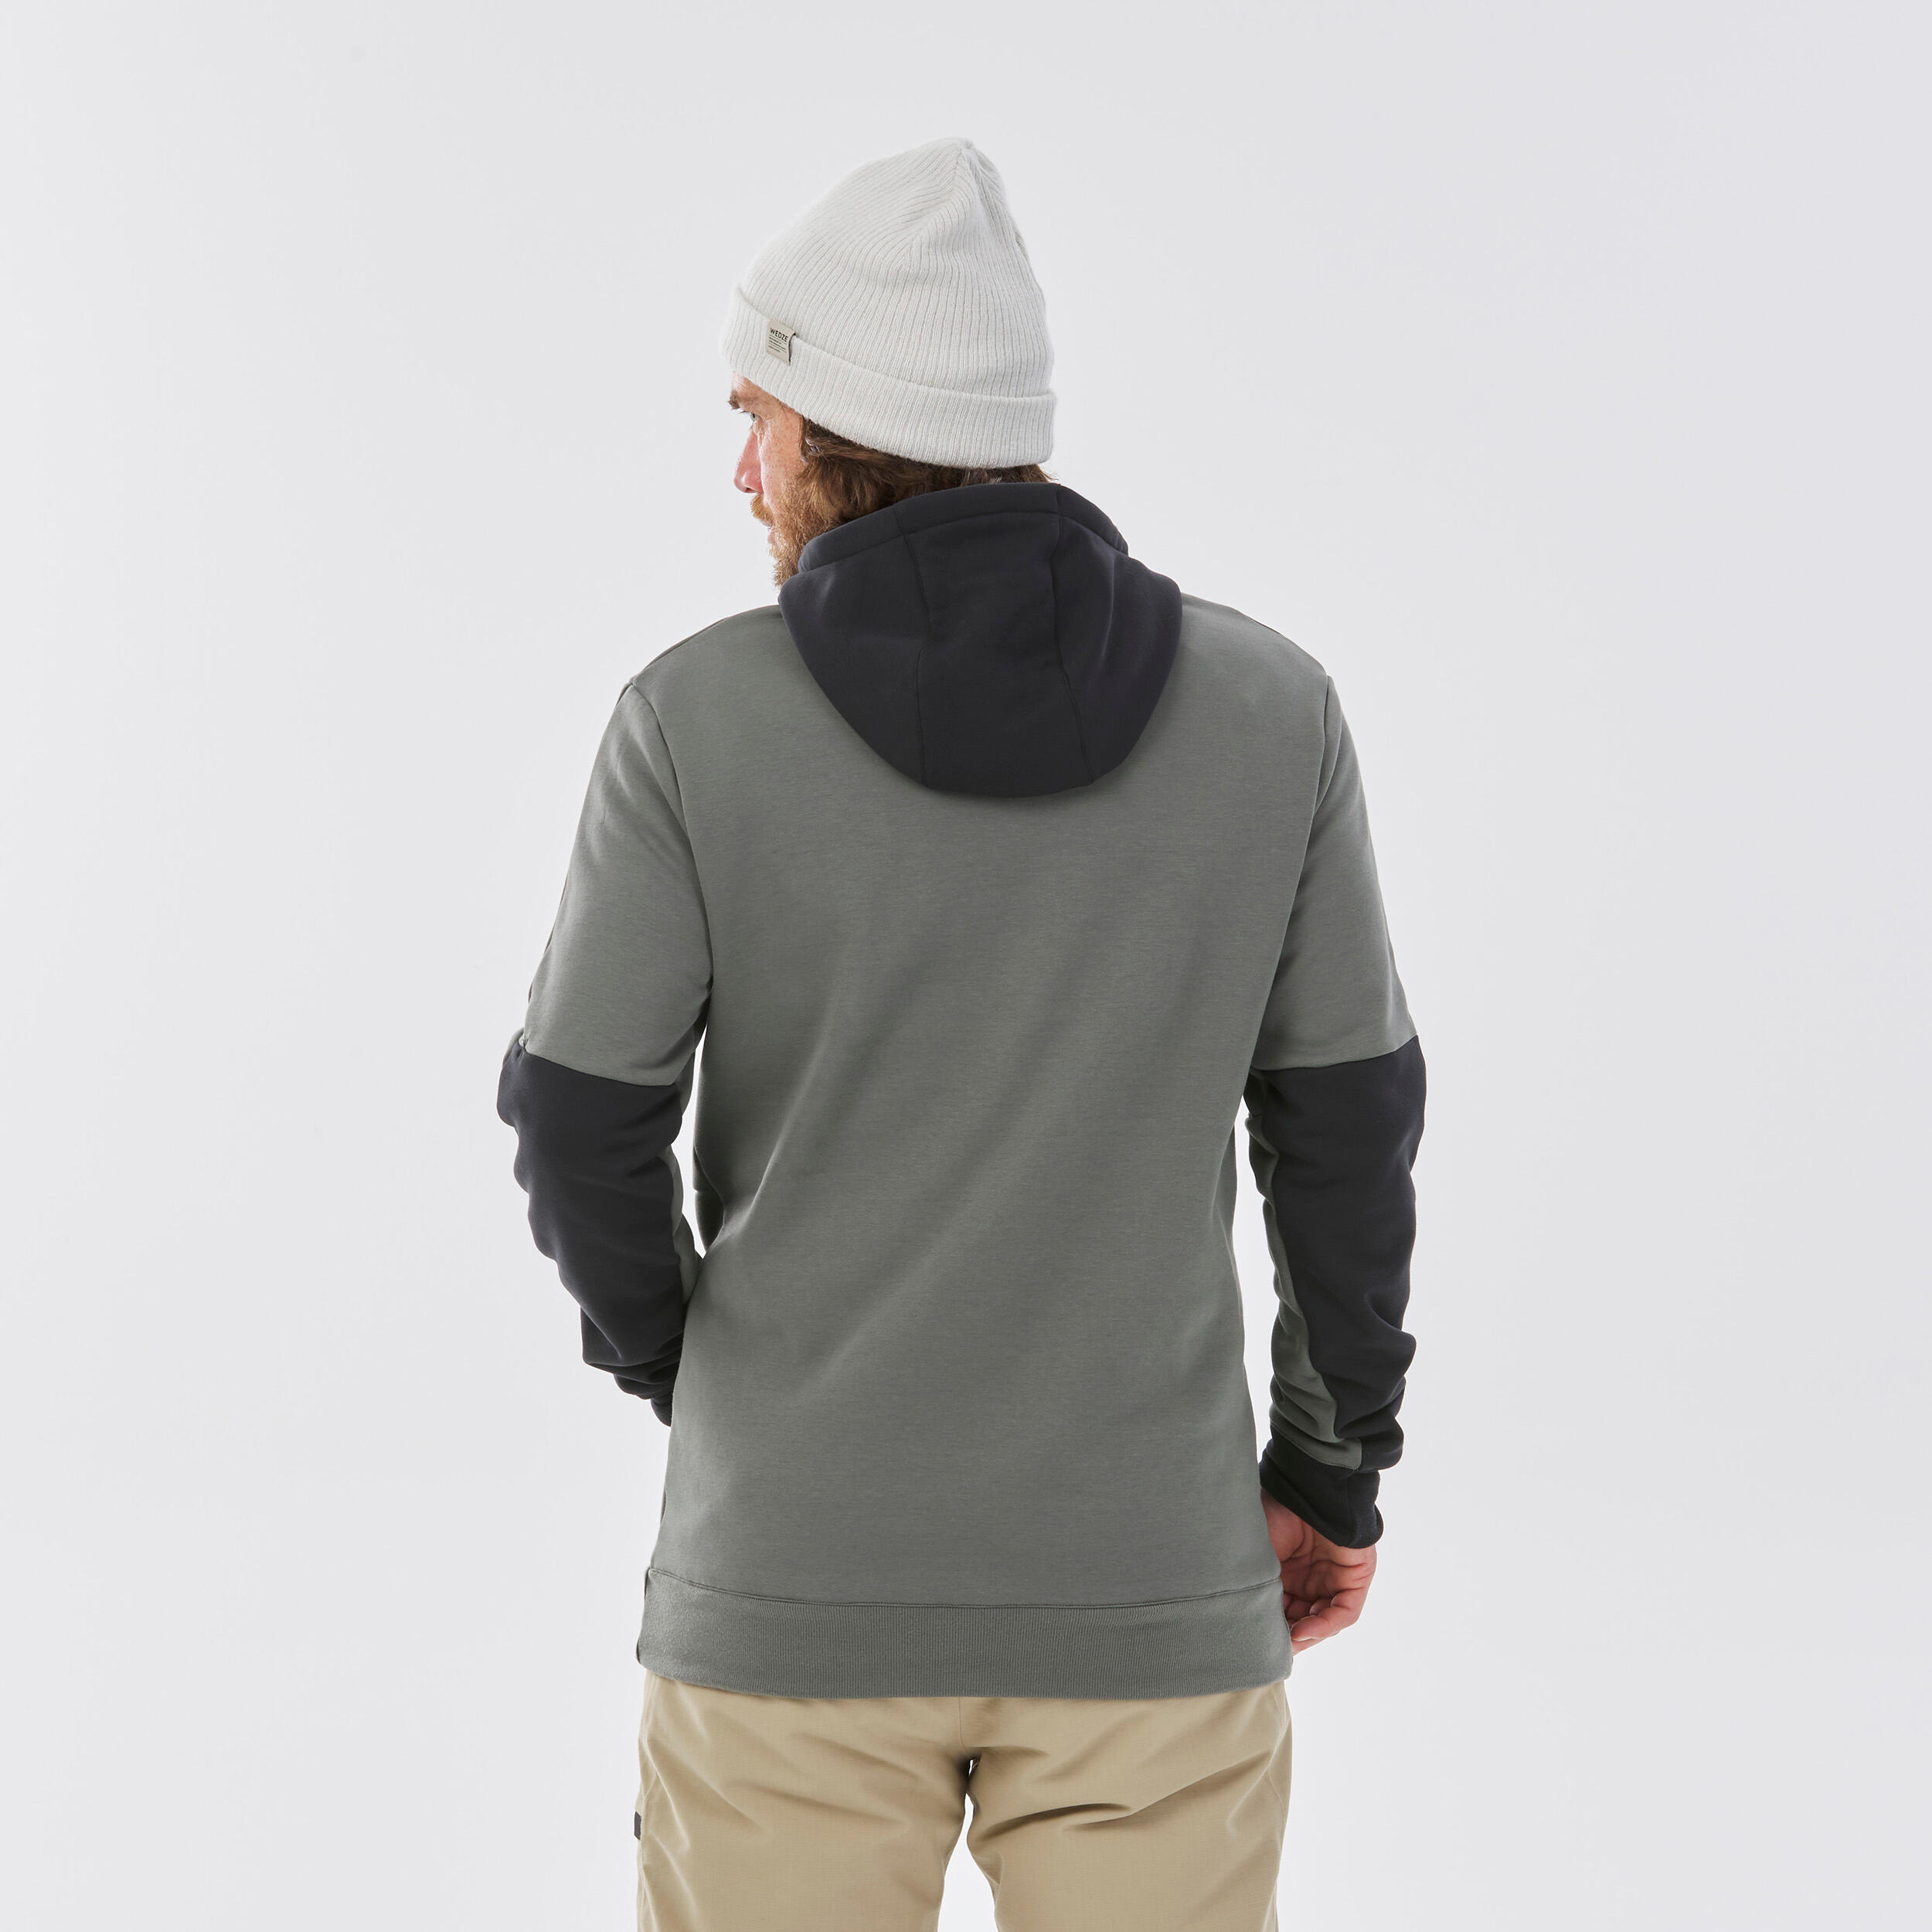 Men's Hooded Snowboard Sweatshirt - SNB HDY Khaki 6/9